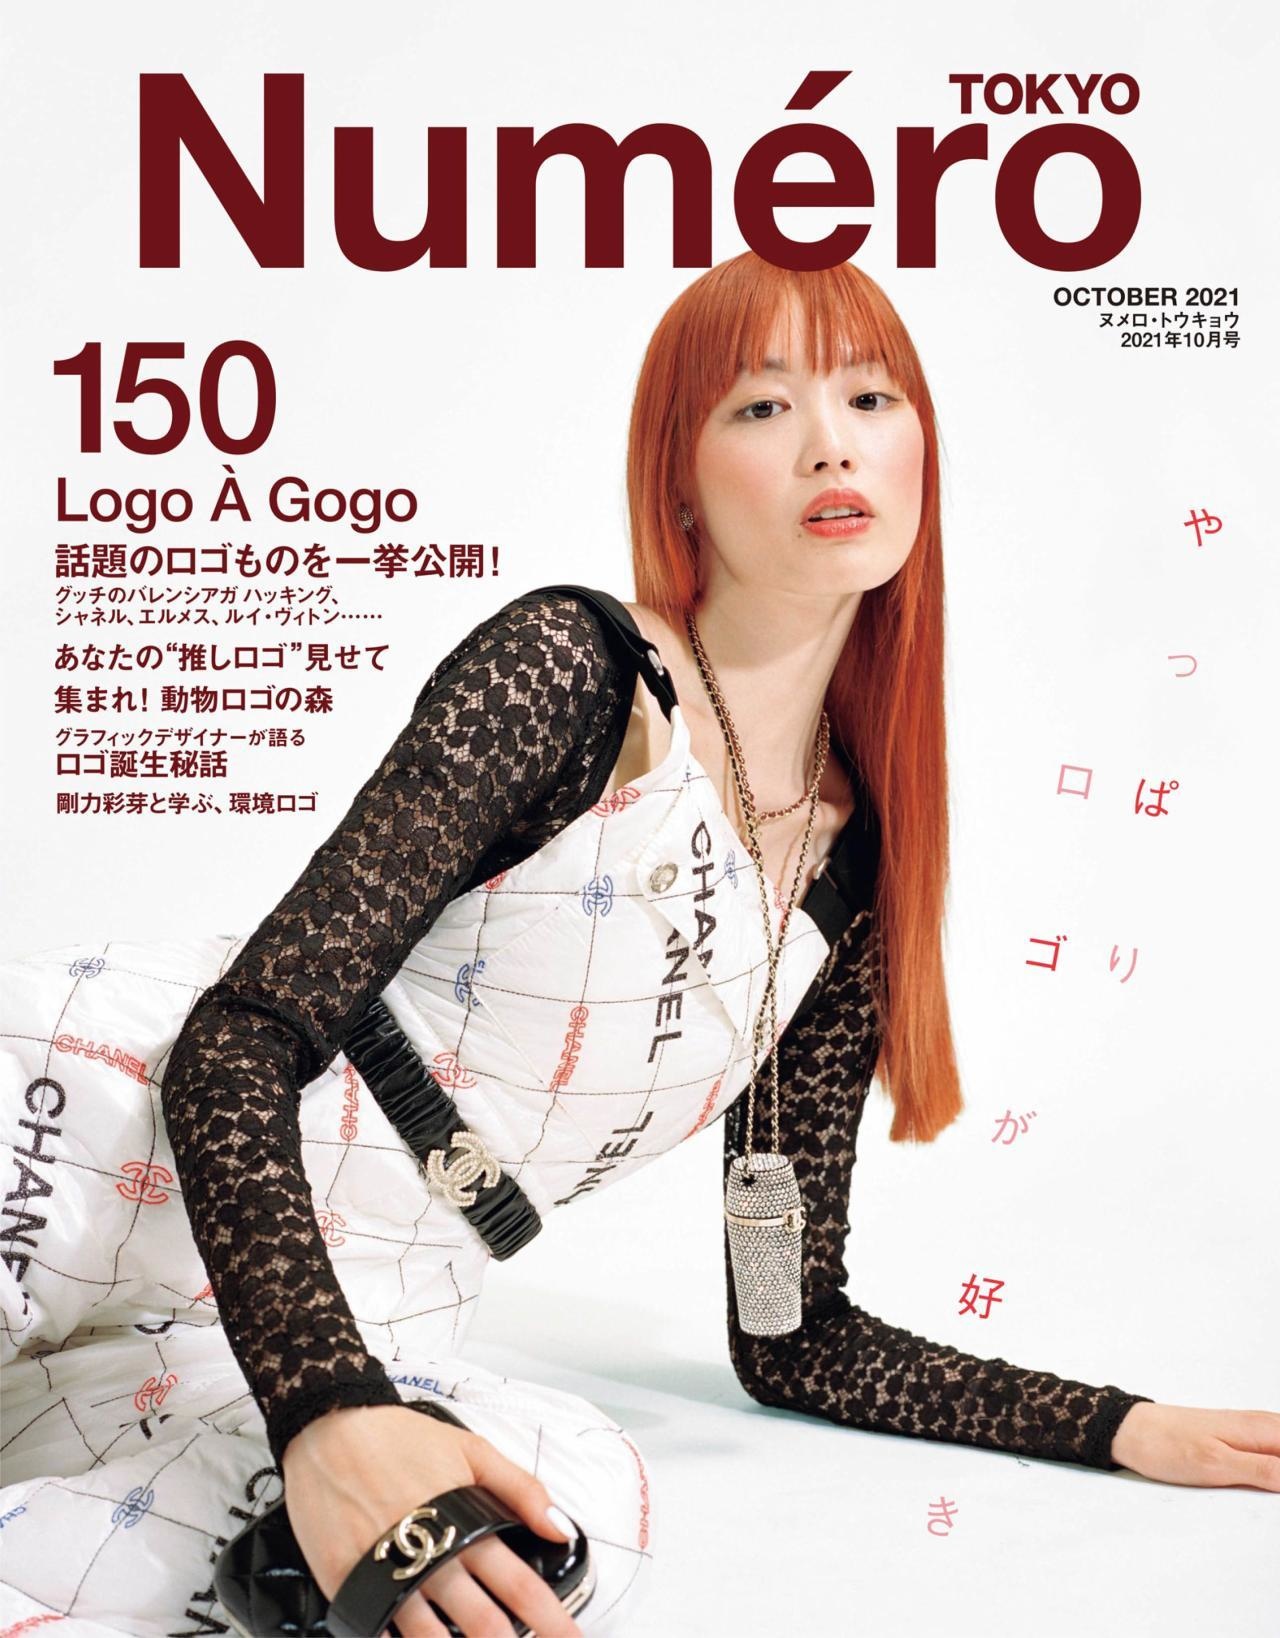 Numéro Tokyo October 2021 Cover Story Editorial